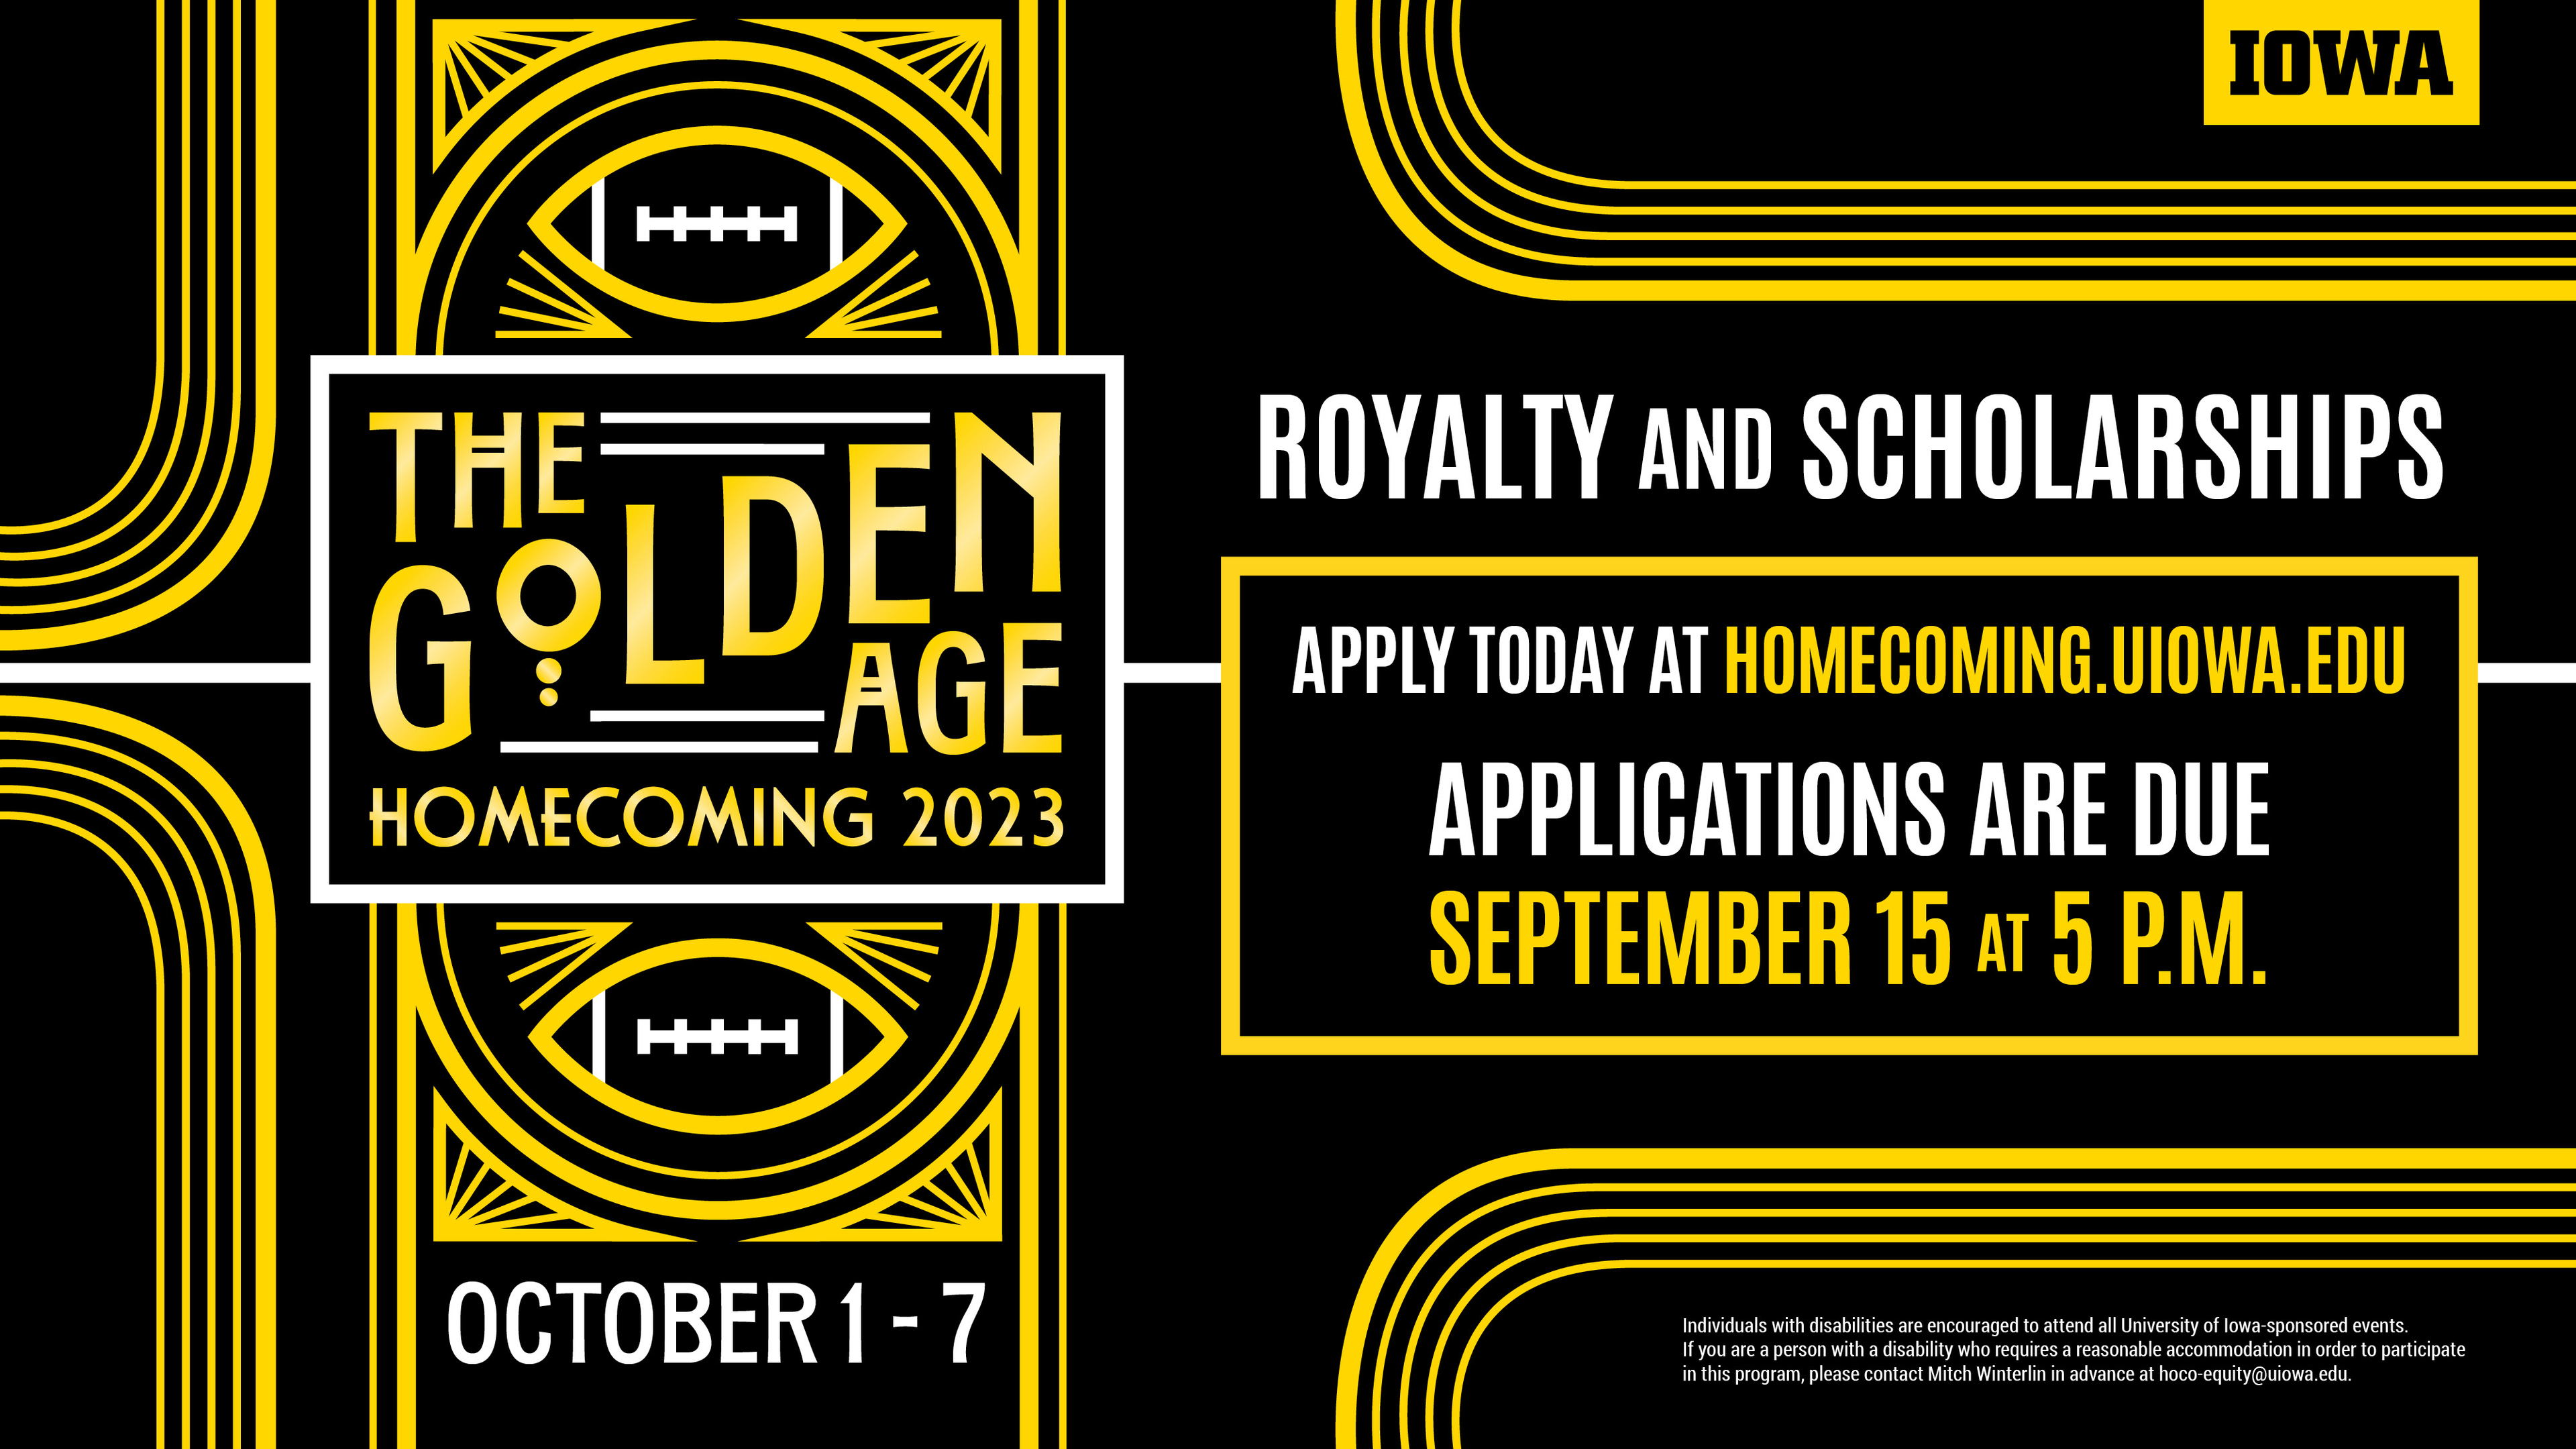 Homecoming Royalty and Scholarship Ad: Application closes September 15th at 5:00 PM